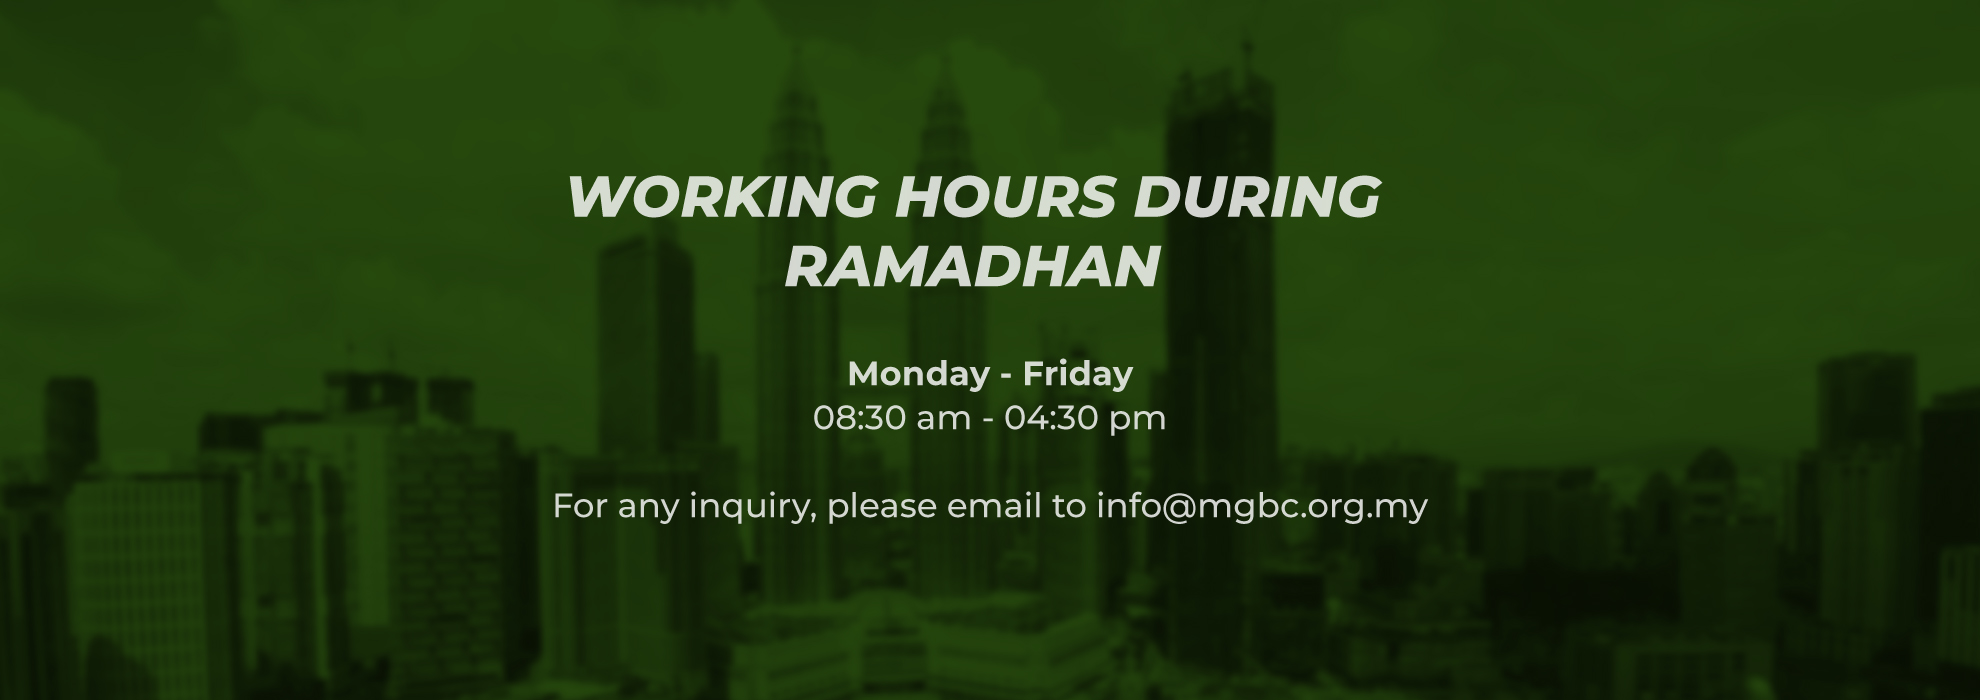 malaysiaGBC_Notice-Ramadhan